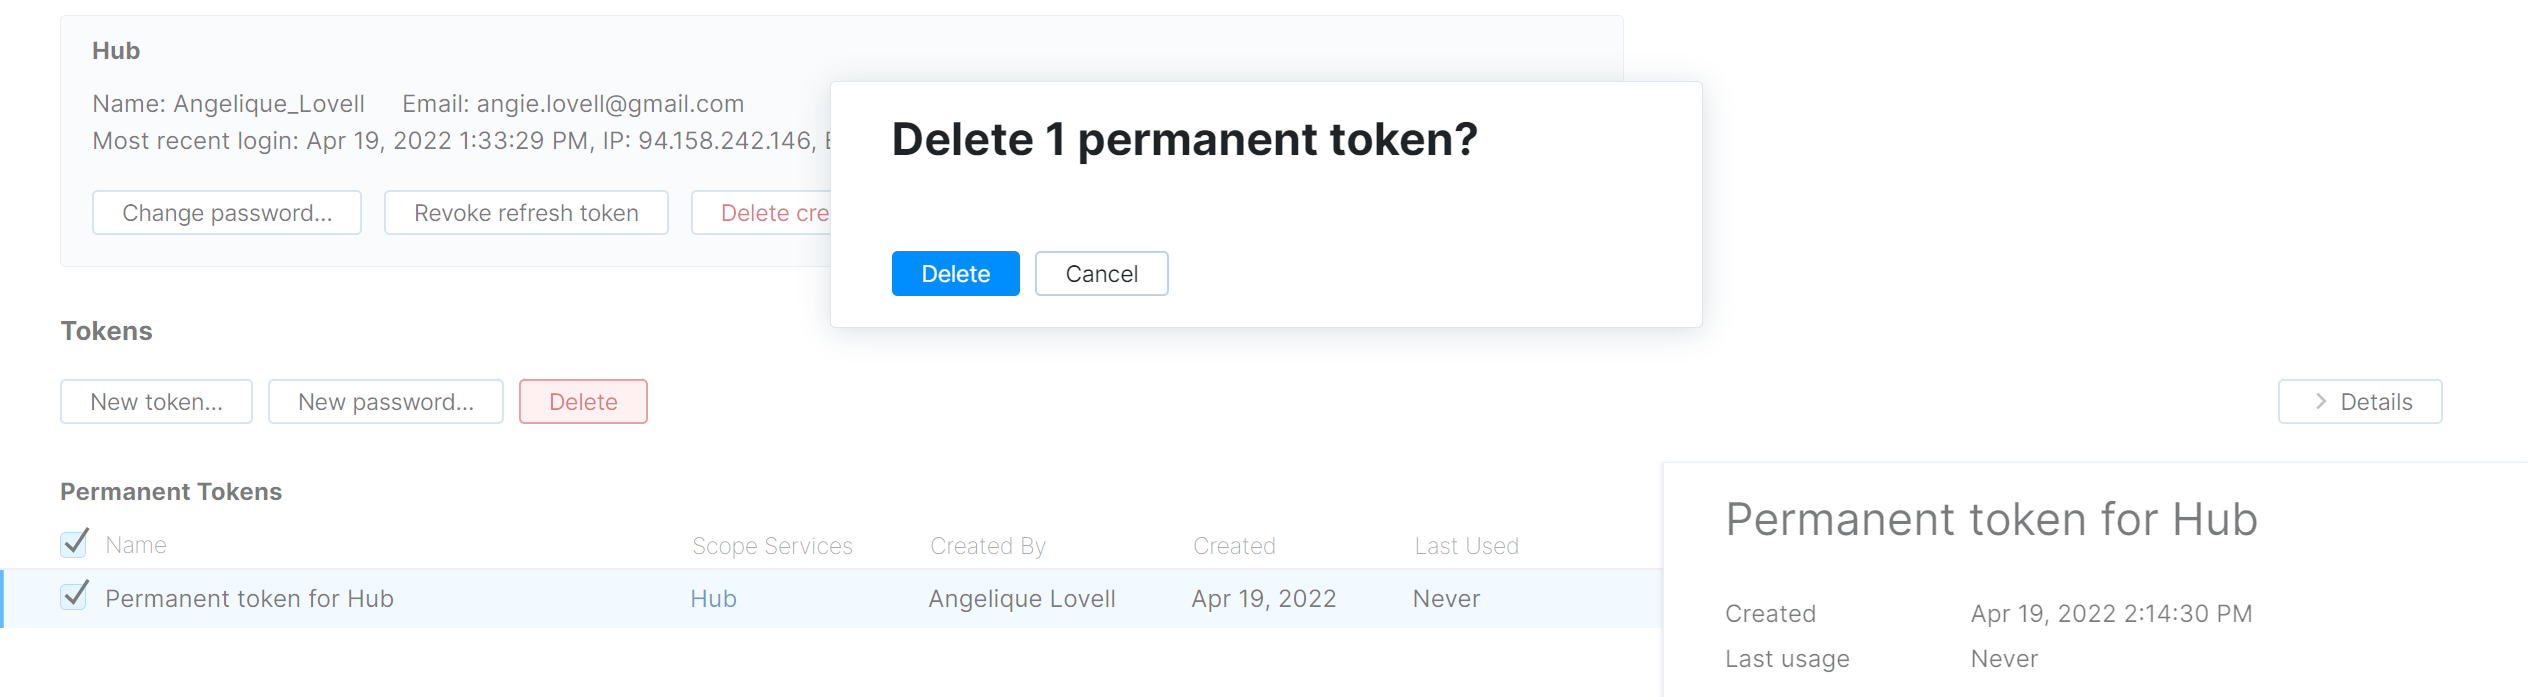 Delete permanent token